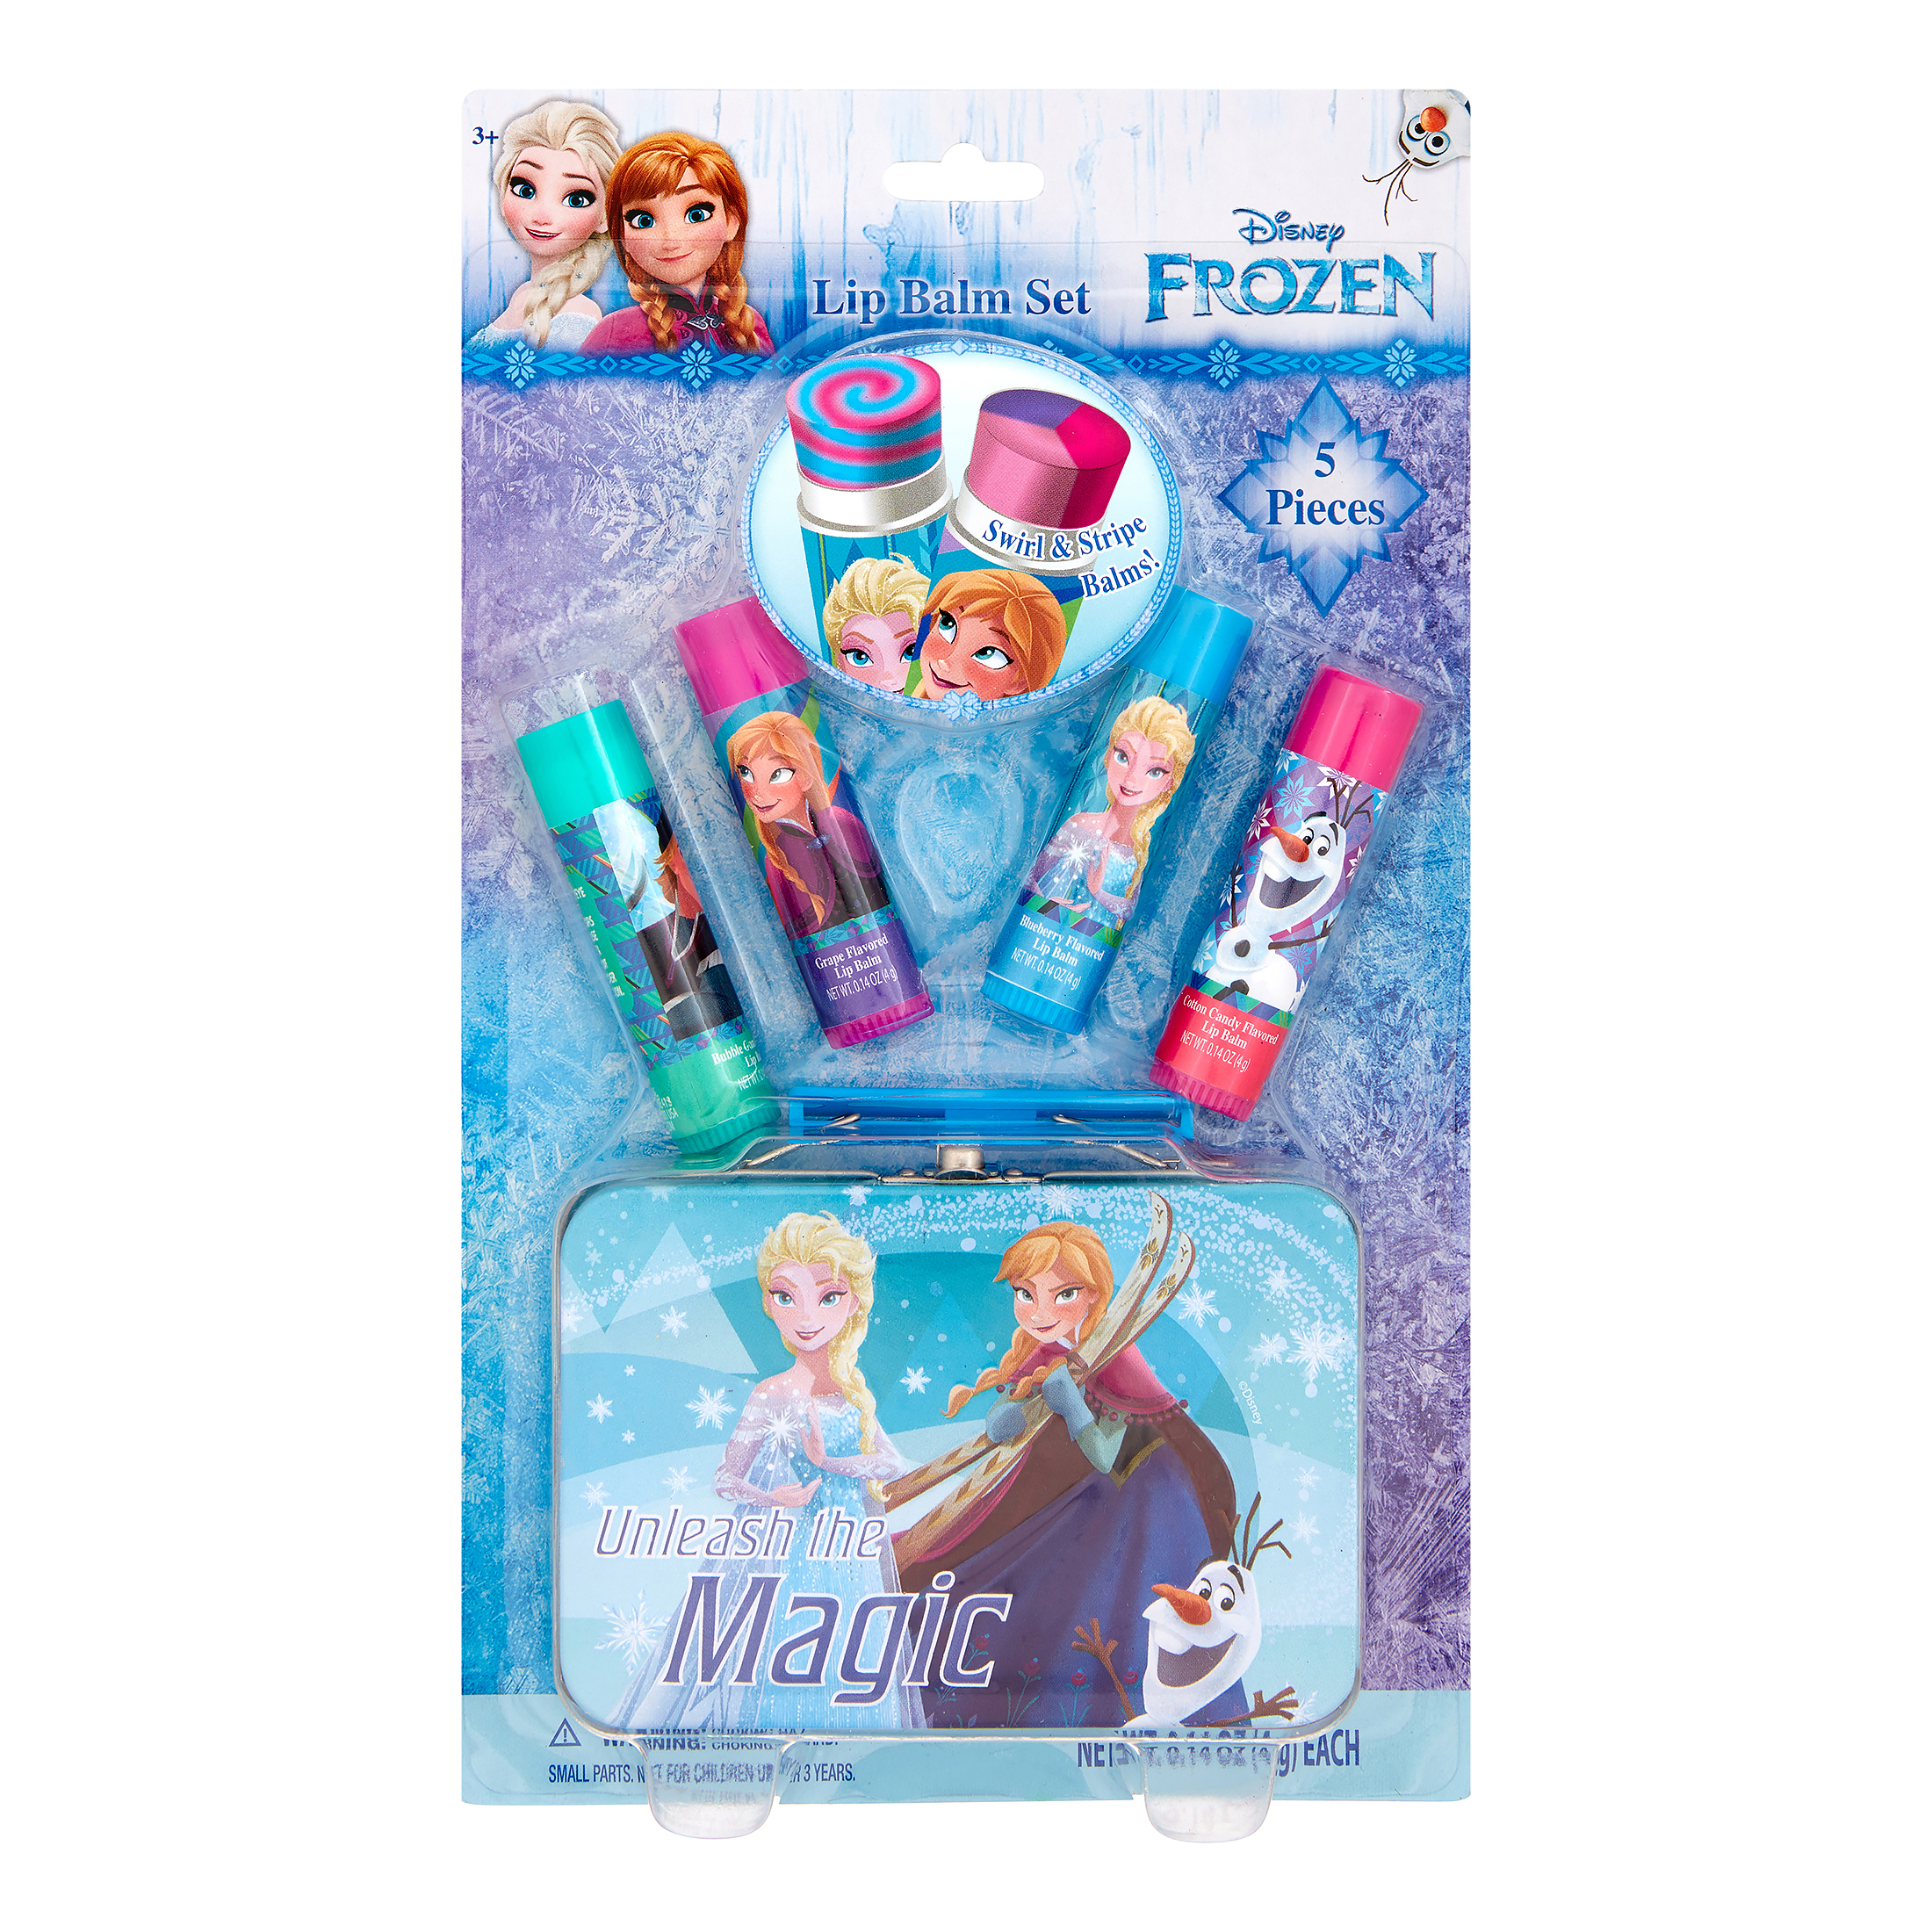 Disney Frozen Lip Balm Gift Set with Metal Tin, 5 Pieces ($9.99 Value) - image 3 of 4